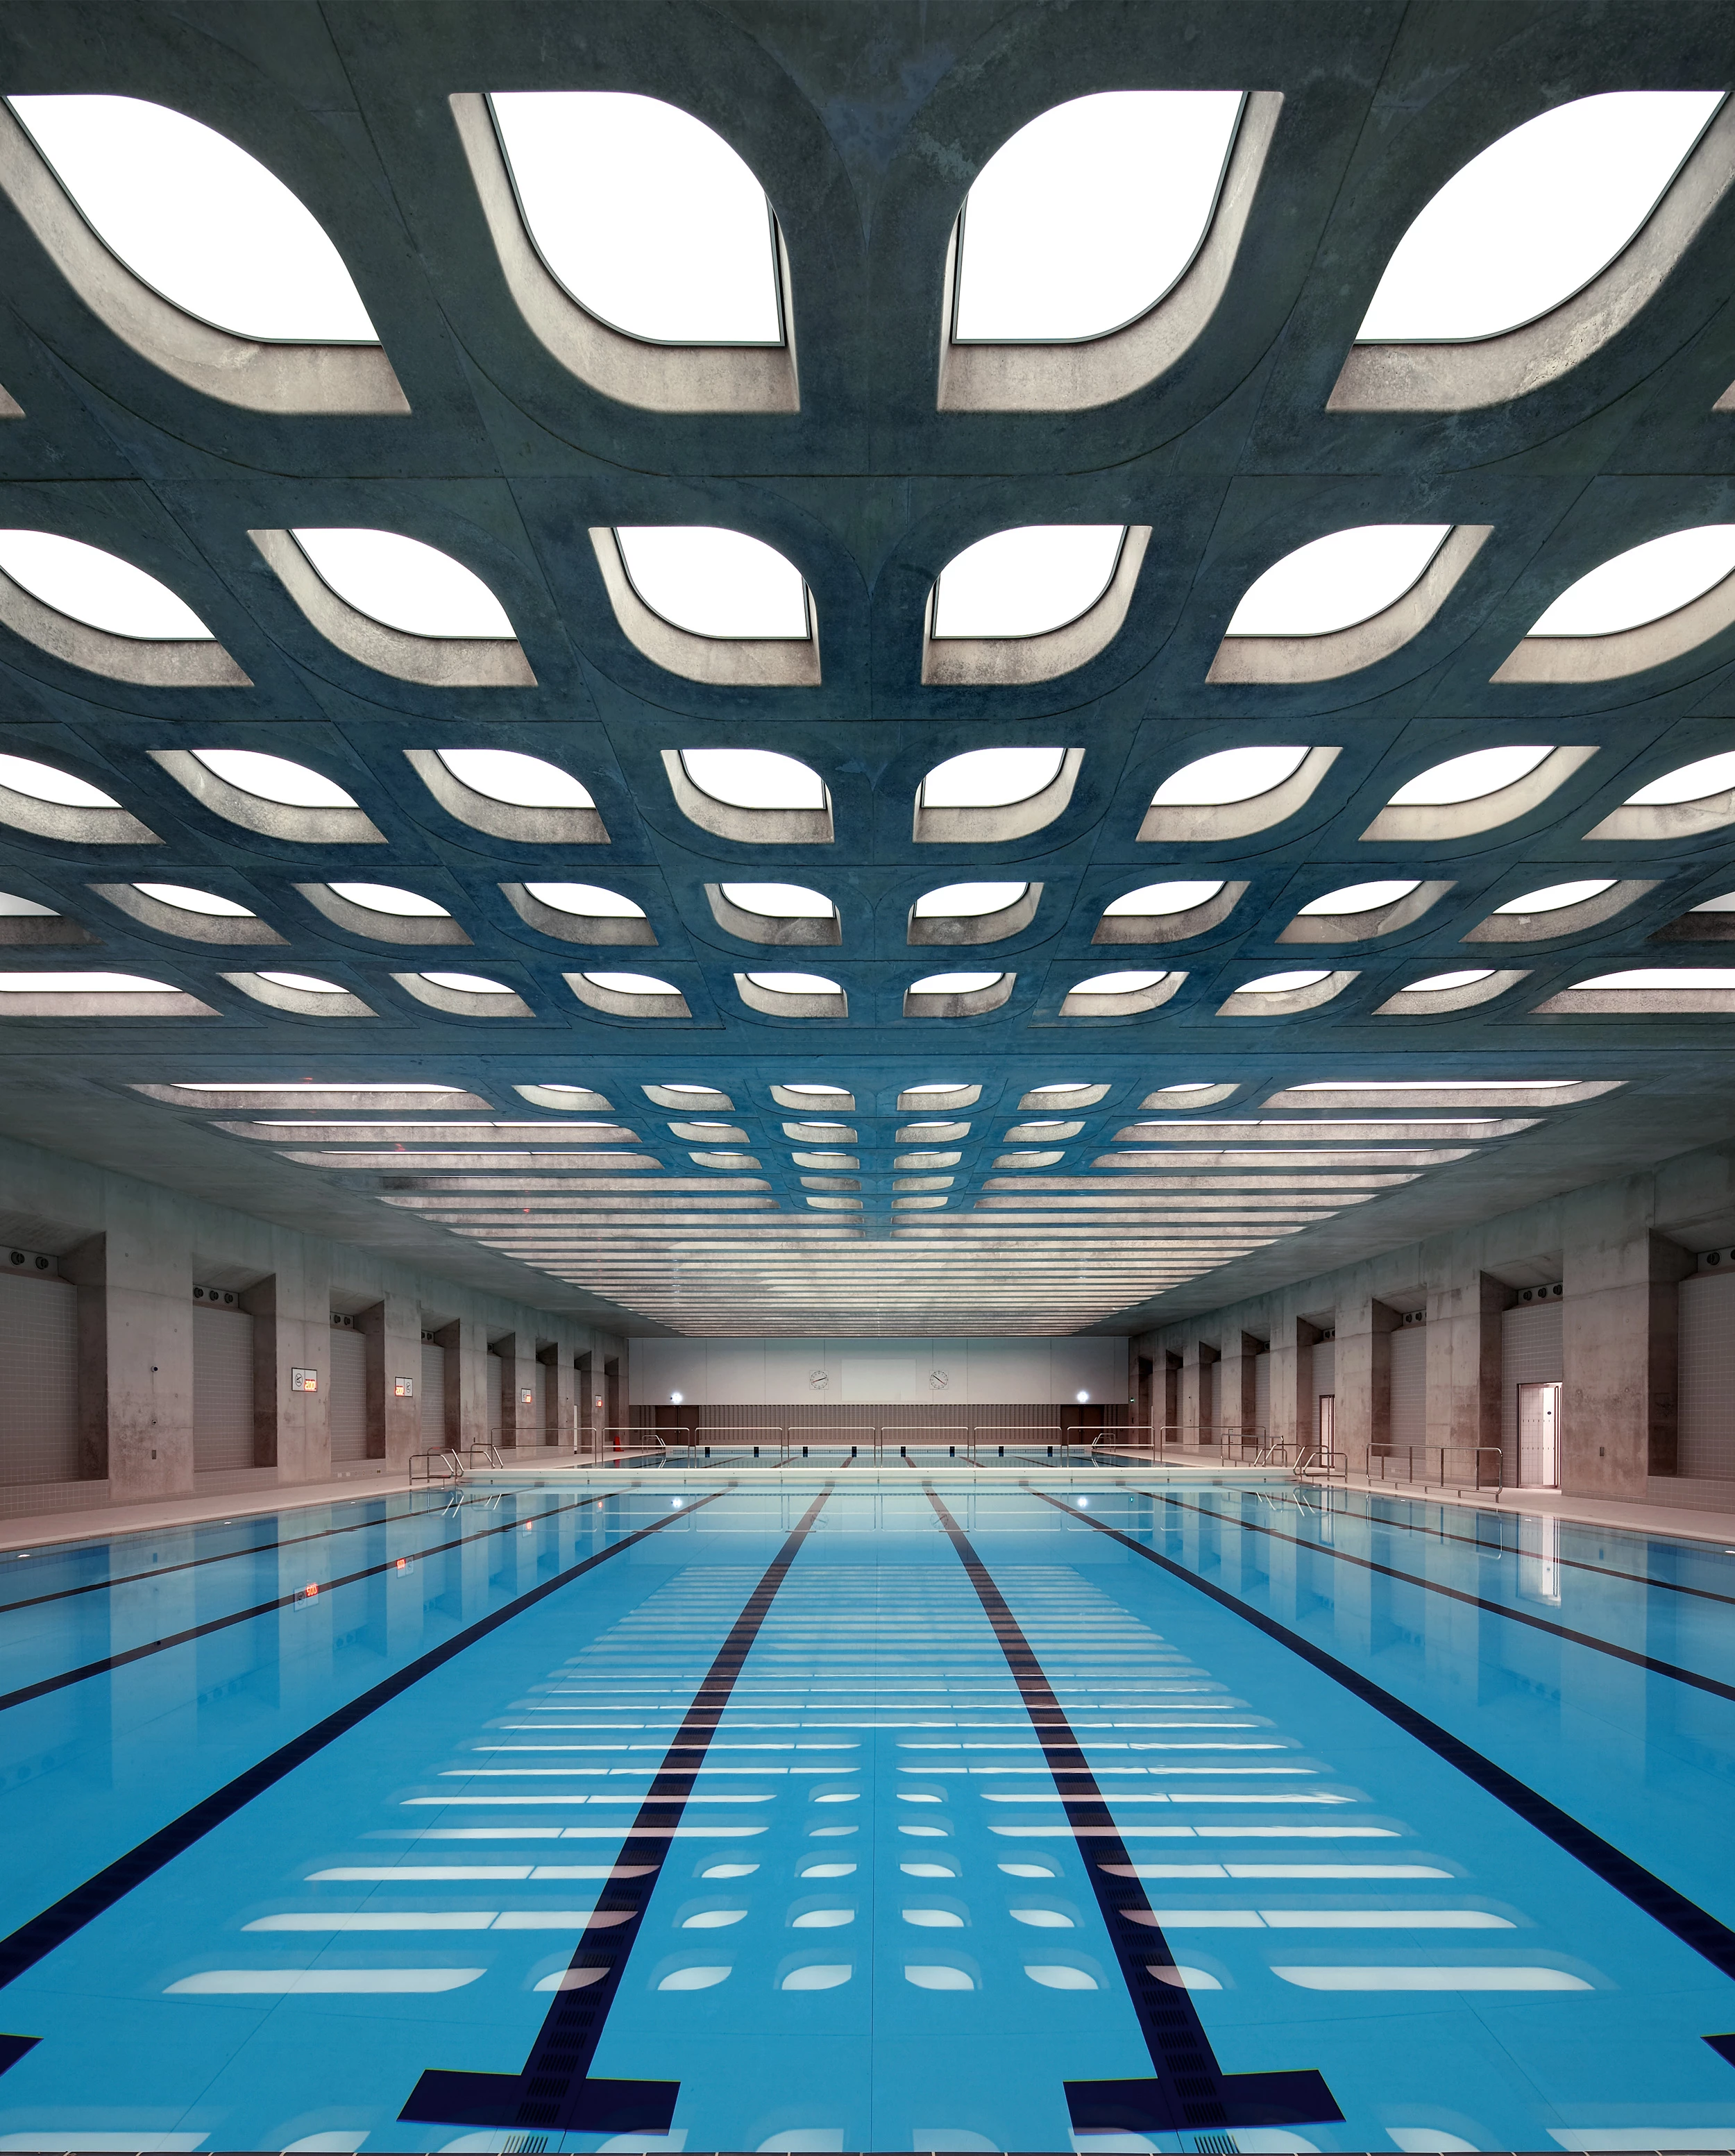  London Aquatic Center